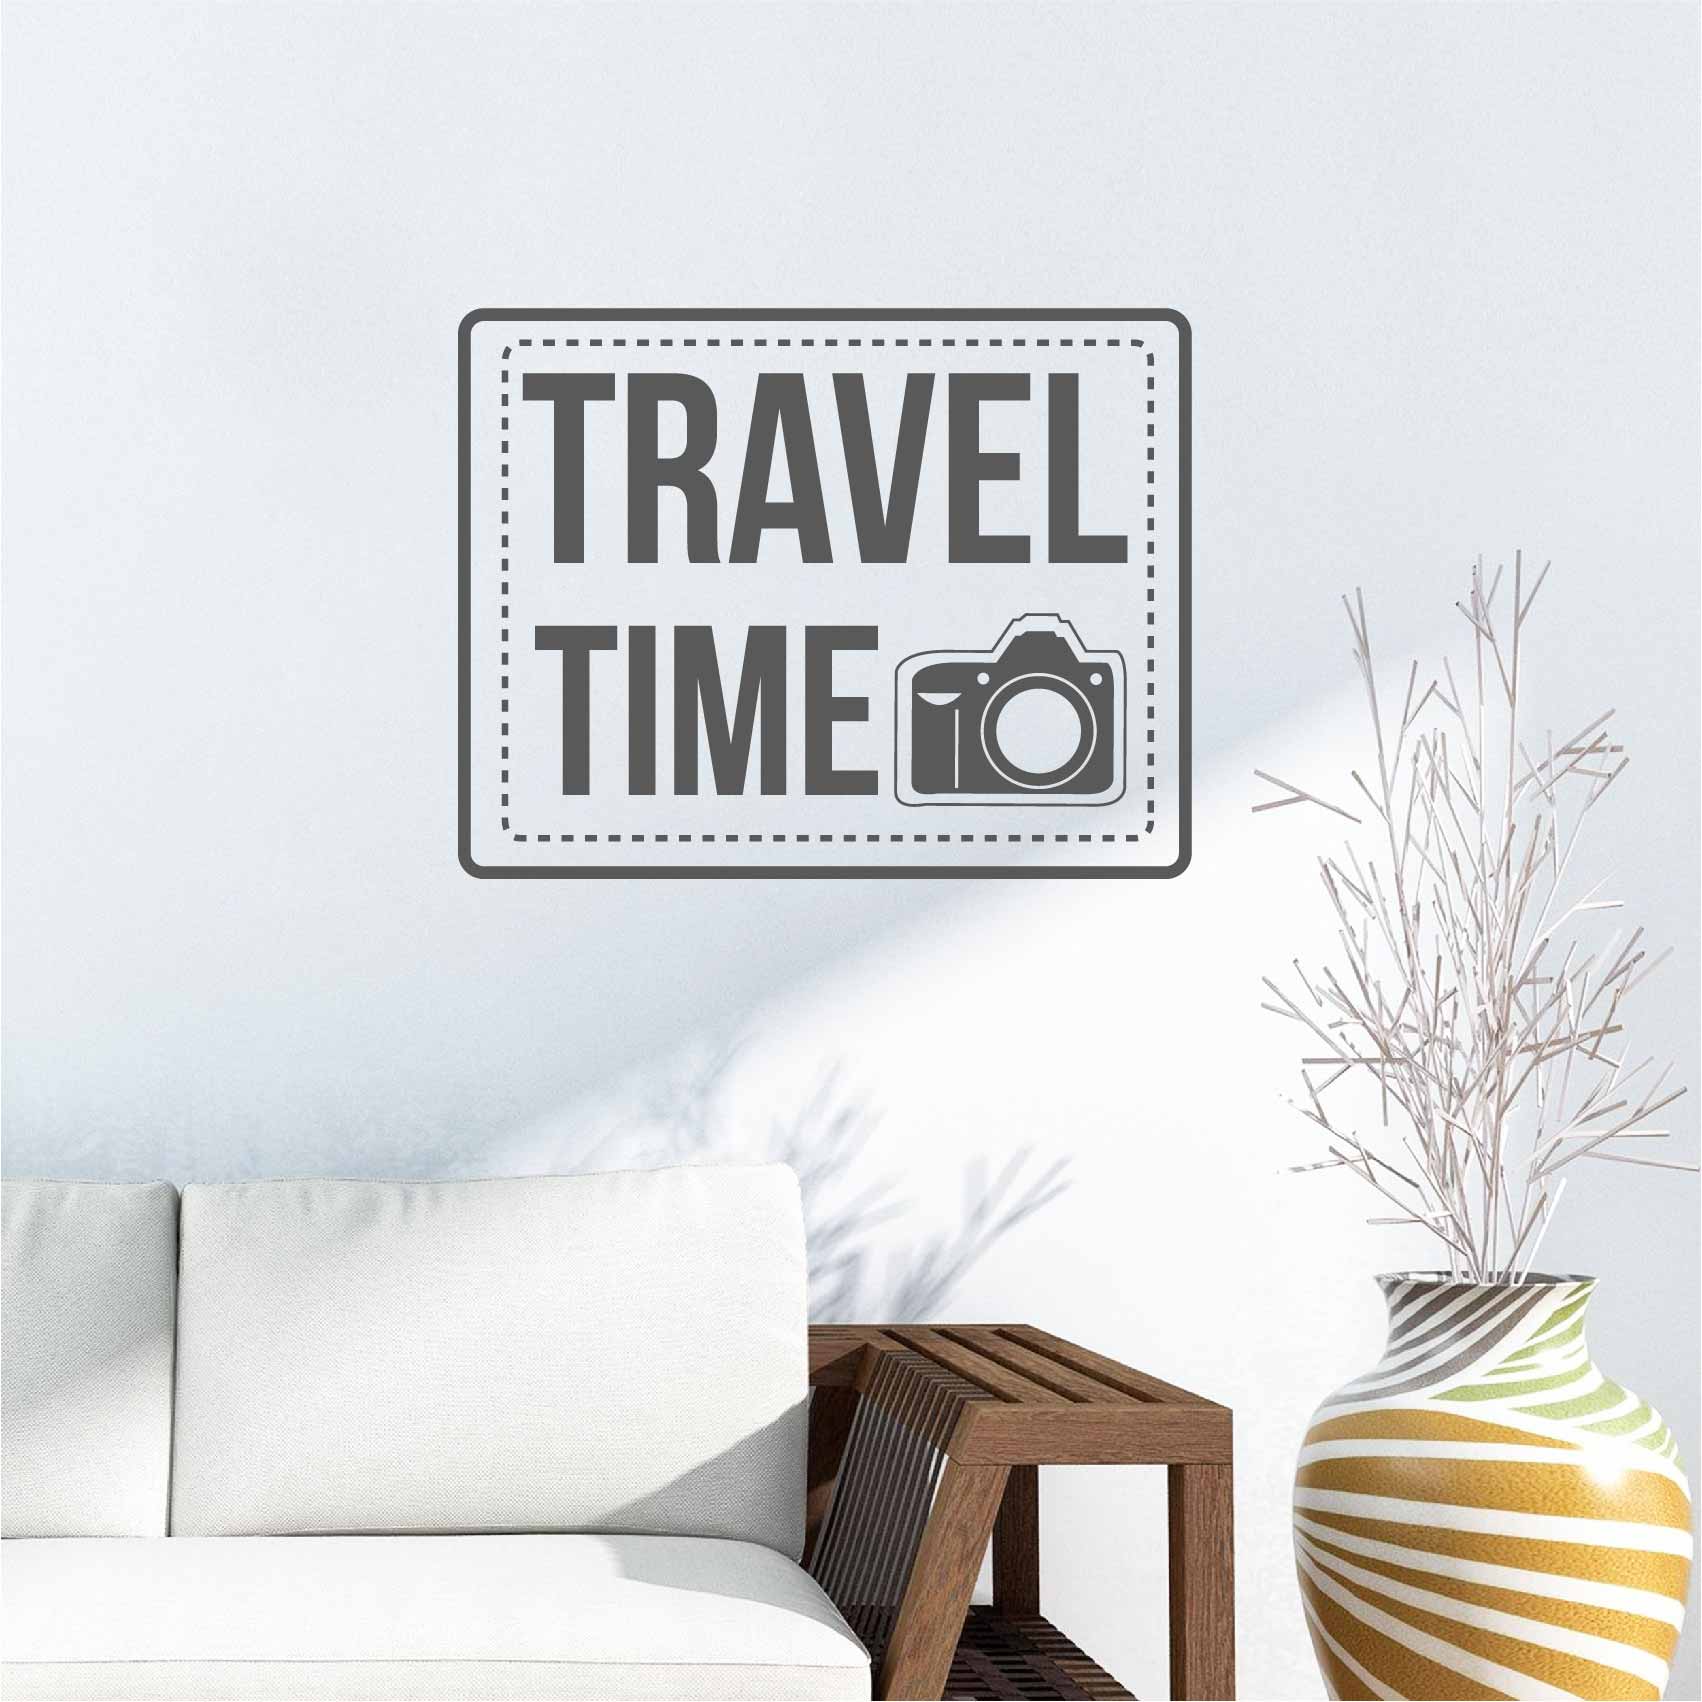 stickers-travel-time-appareil-photo-vintage-voyage-ref1traveltime-autocollant-mural-stickers-muraux-sticker-deco-salon-cuisine-chambre-min